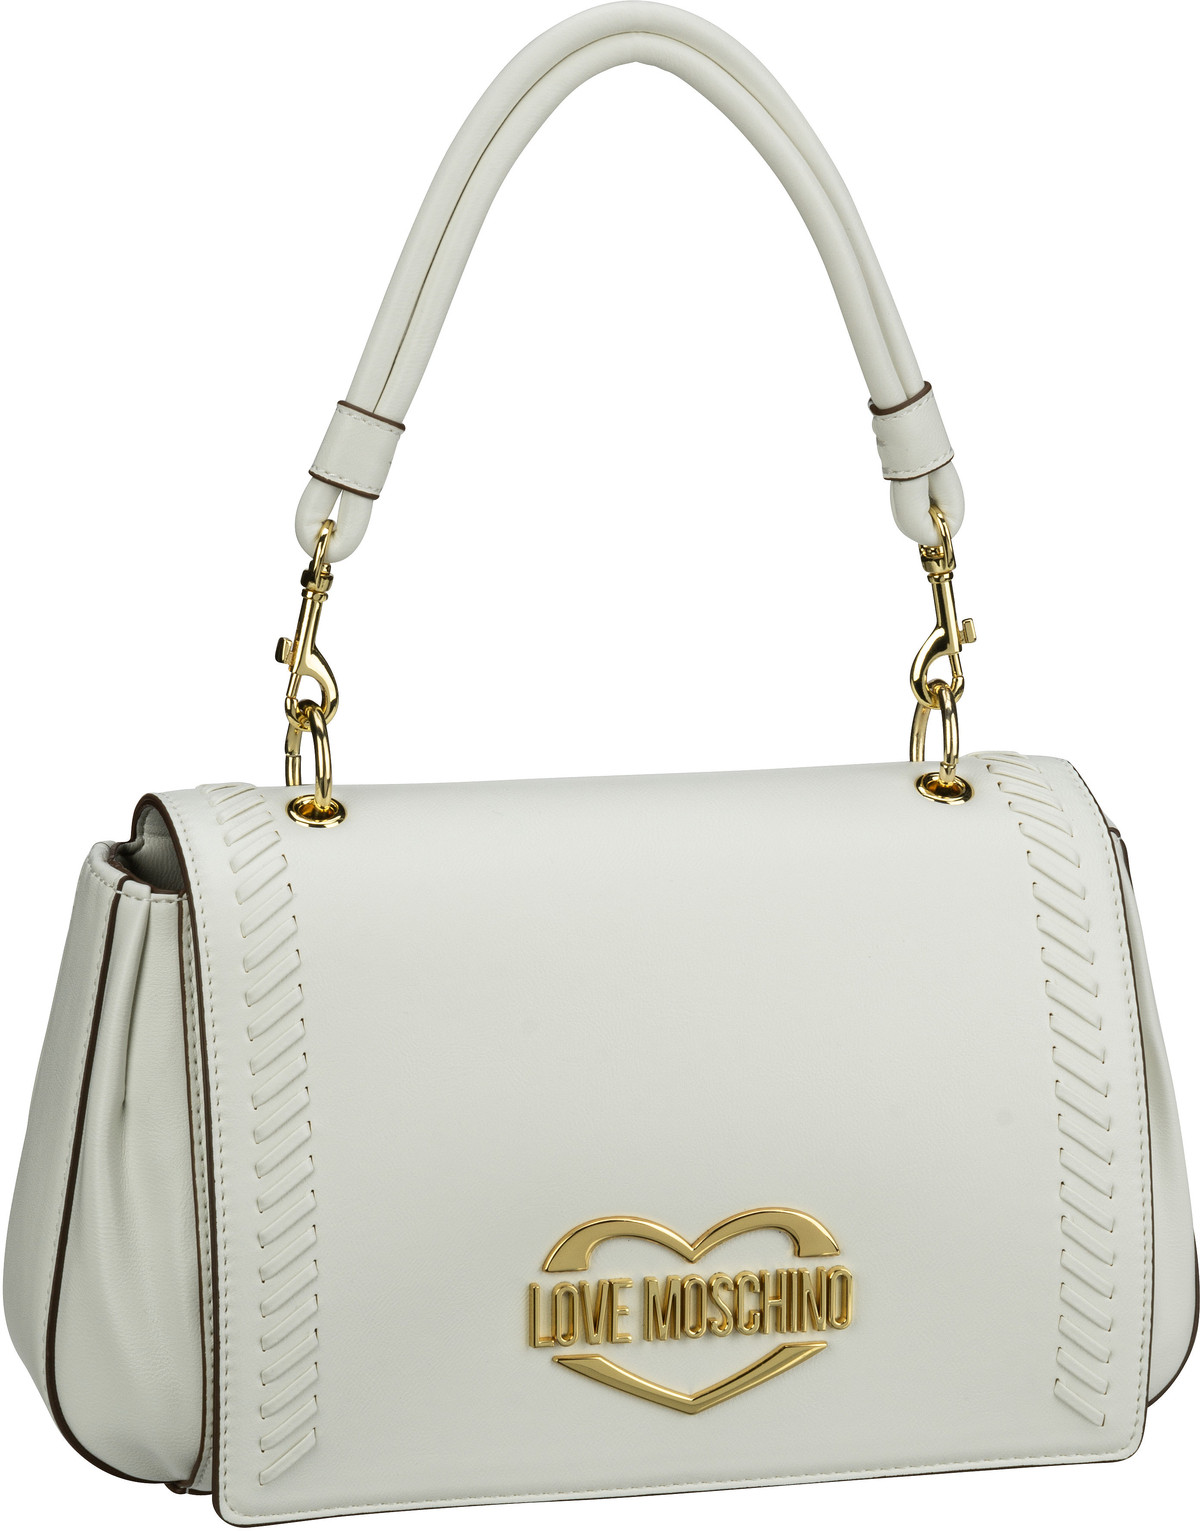 Love Moschino Whip Stitch Shoulder Bag 4055 - Ivory